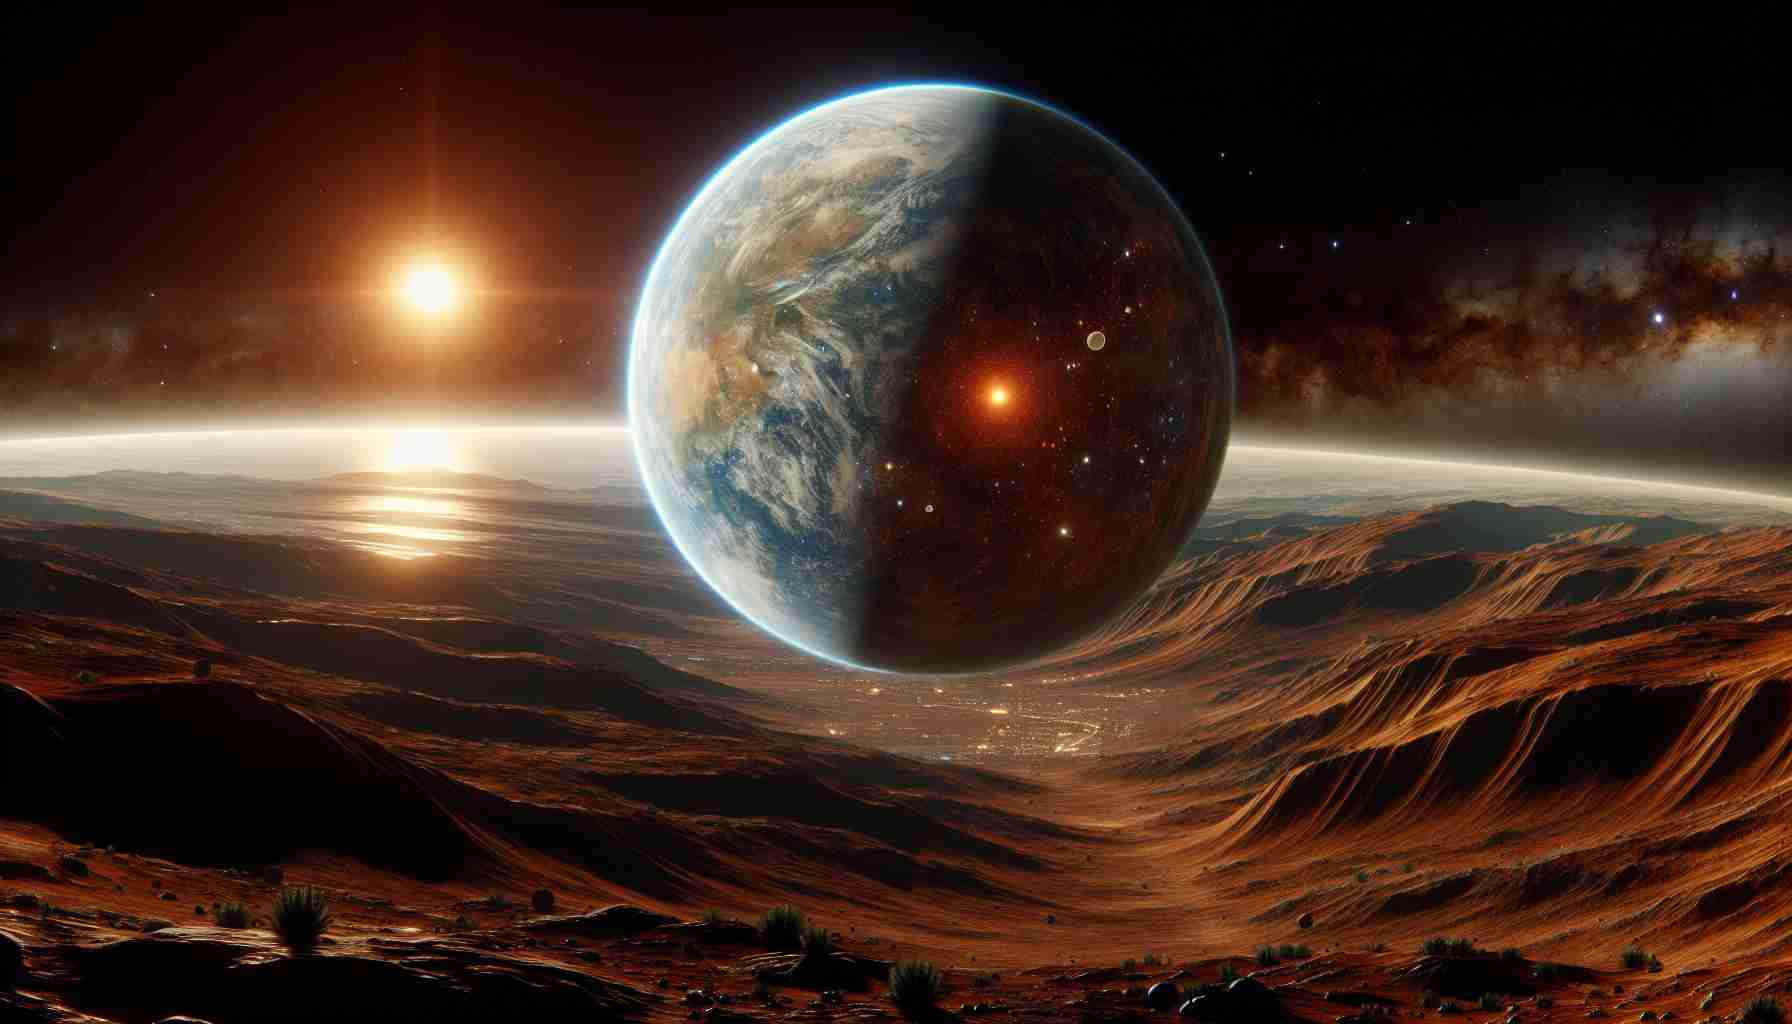 Super Earth 137 Light Years Away